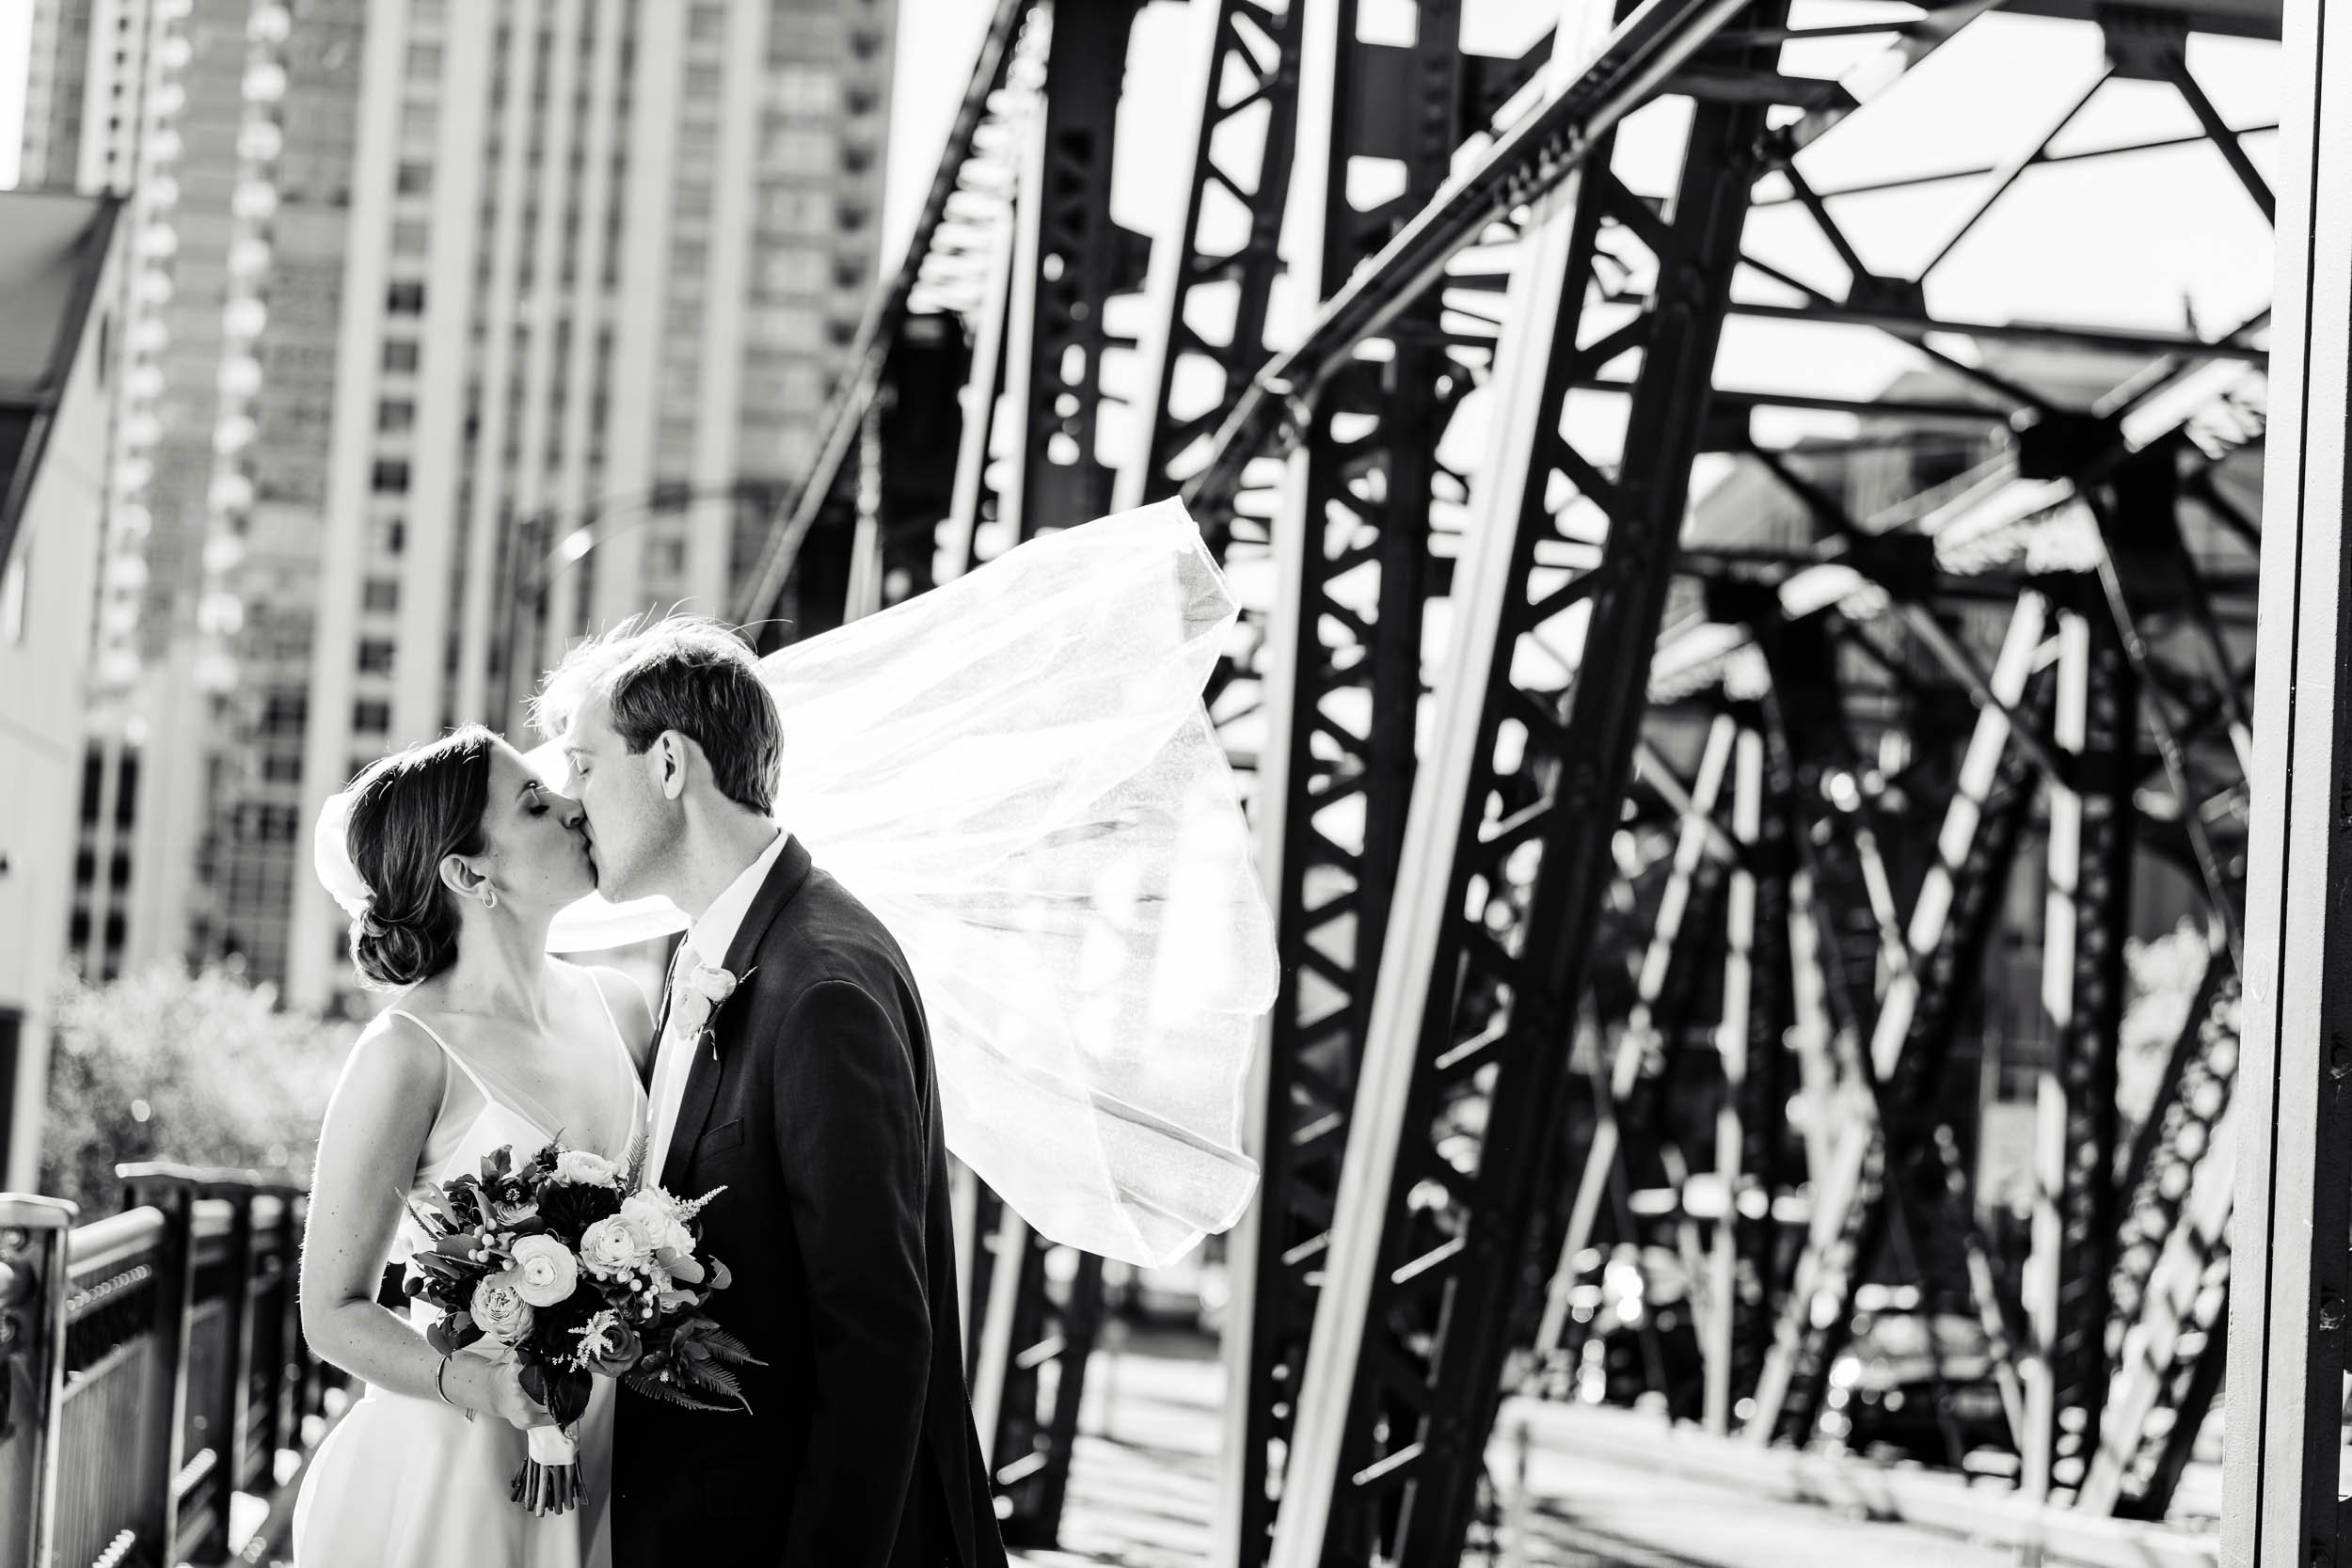 Kinzie Street Bridge | Black White Wedding Photo | Chicago IL